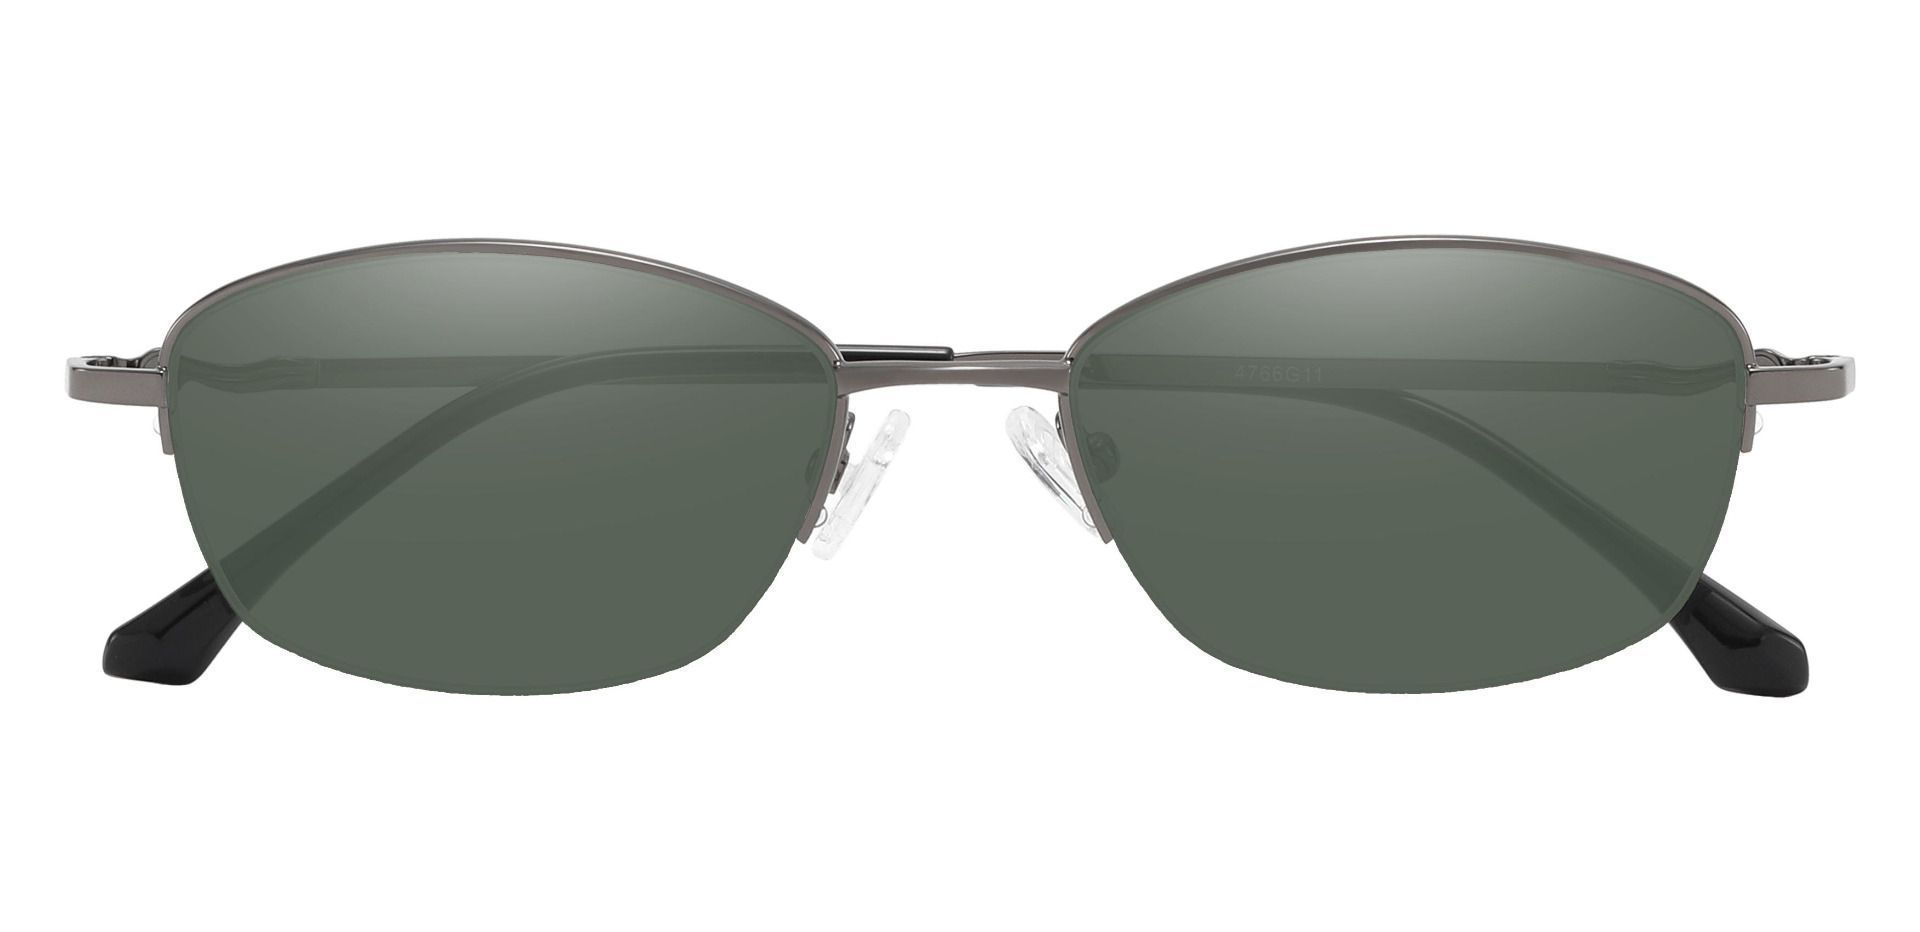 Beulah Oval Progressive Sunglasses - Gray Frame With Green Lenses